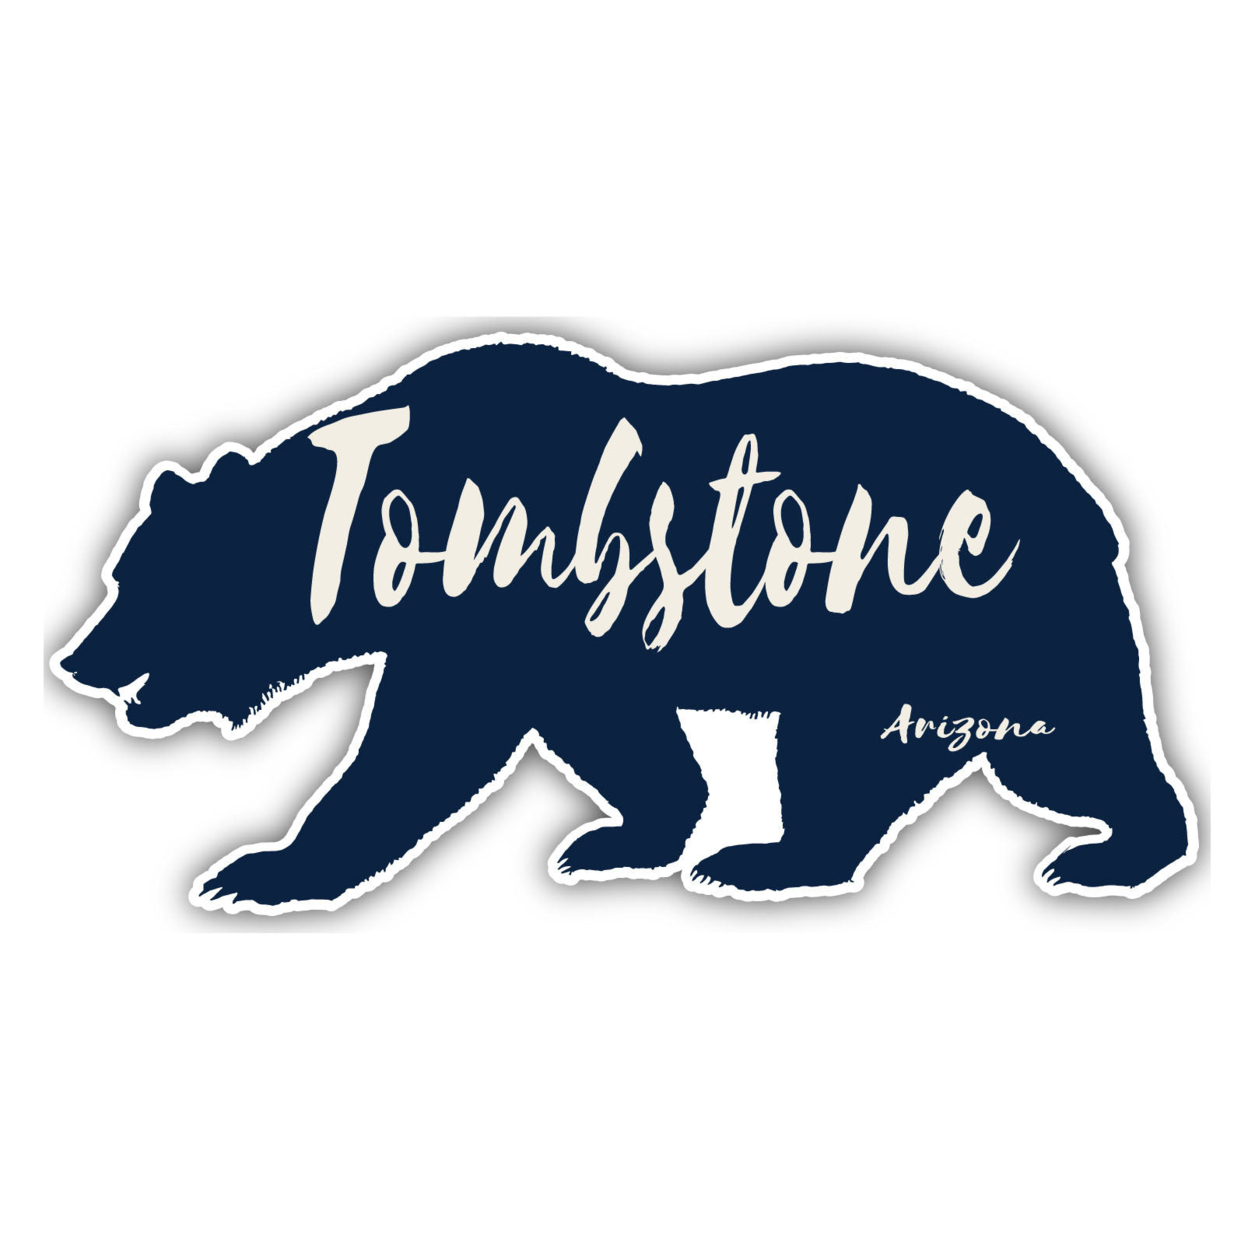 Tombstone Arizona Souvenir Decorative Stickers (Choose Theme And Size) - Single Unit, 2-Inch, Adventures Awaits